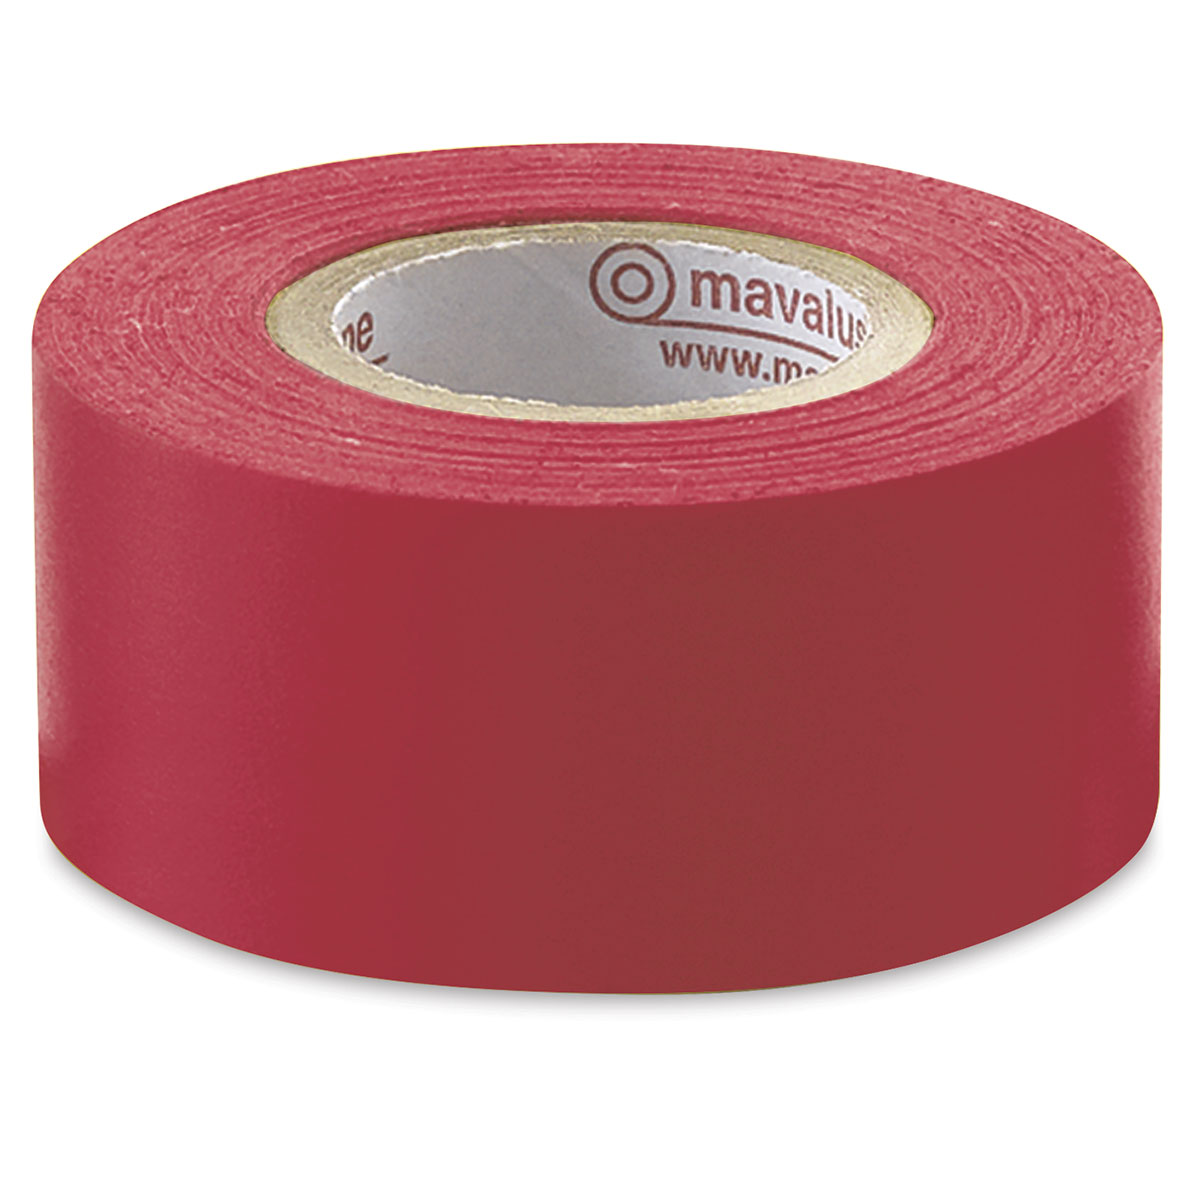 Mavalus Multi Purpose Tape - Basic Supplies - 1 Piece, 13682502